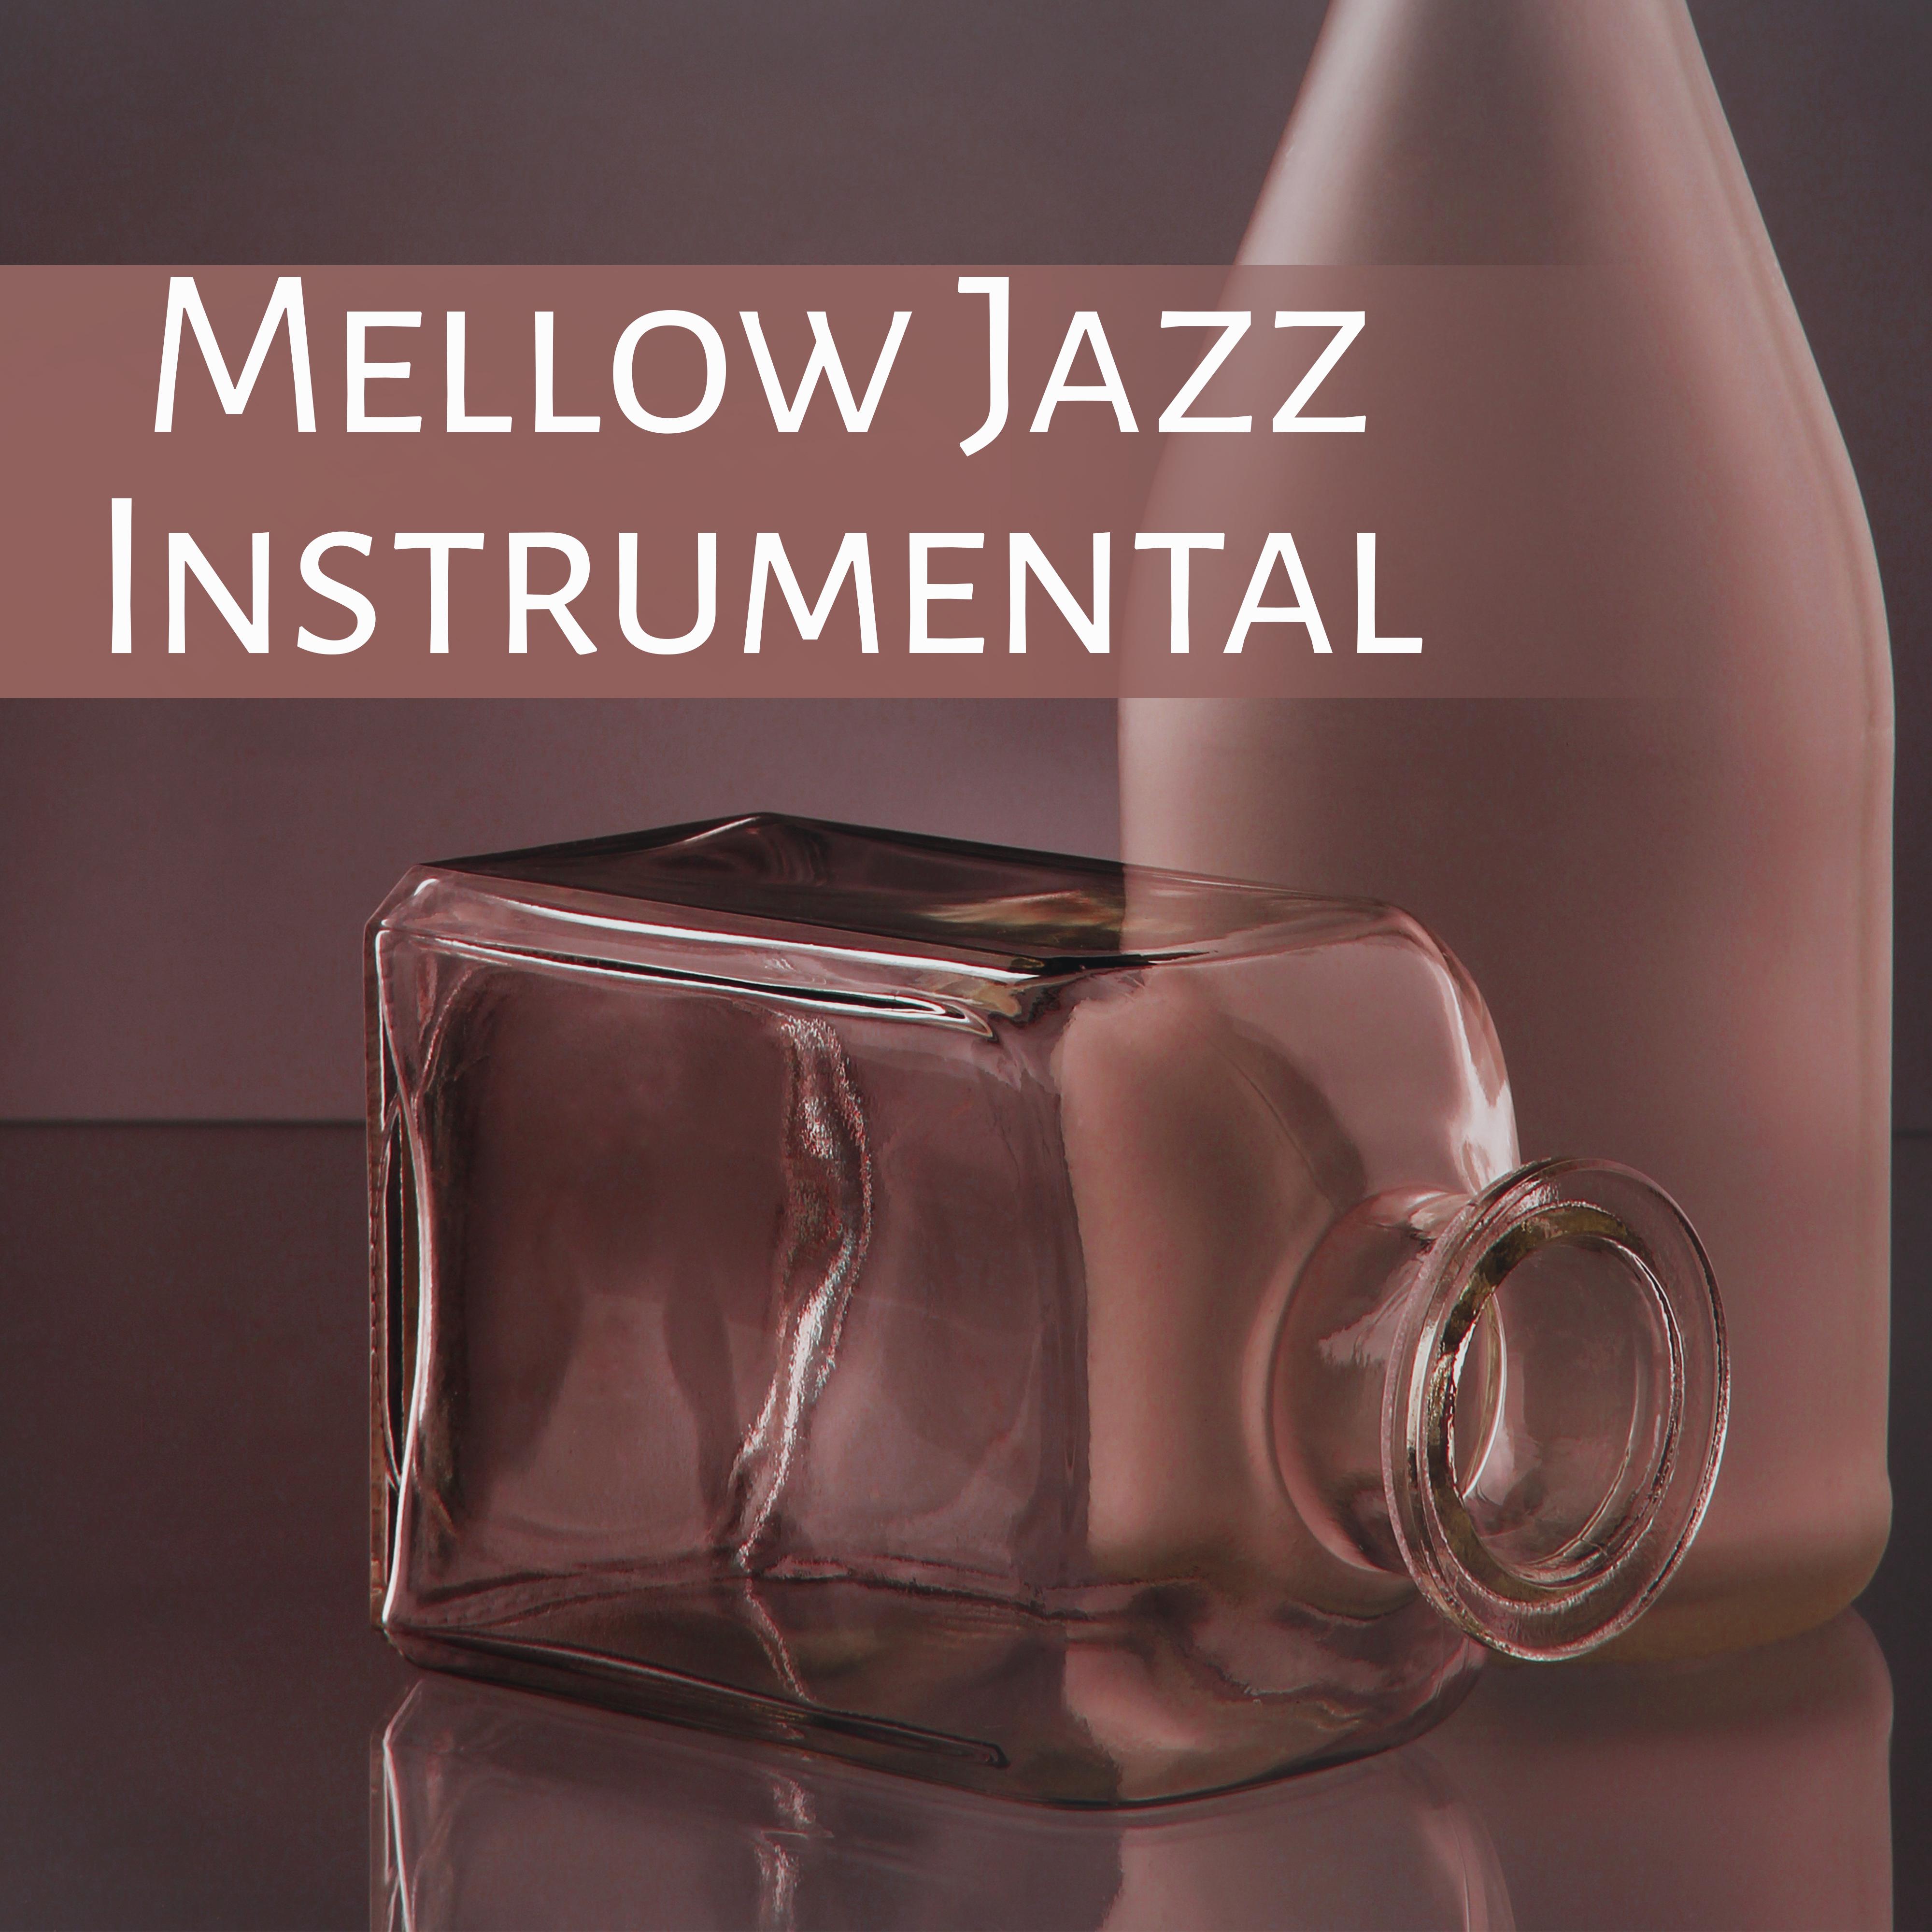 Mellow Jazz Instrumental  Soft Jazz, Instrumental Music, Piano Lounge, Easy Listening, Relax